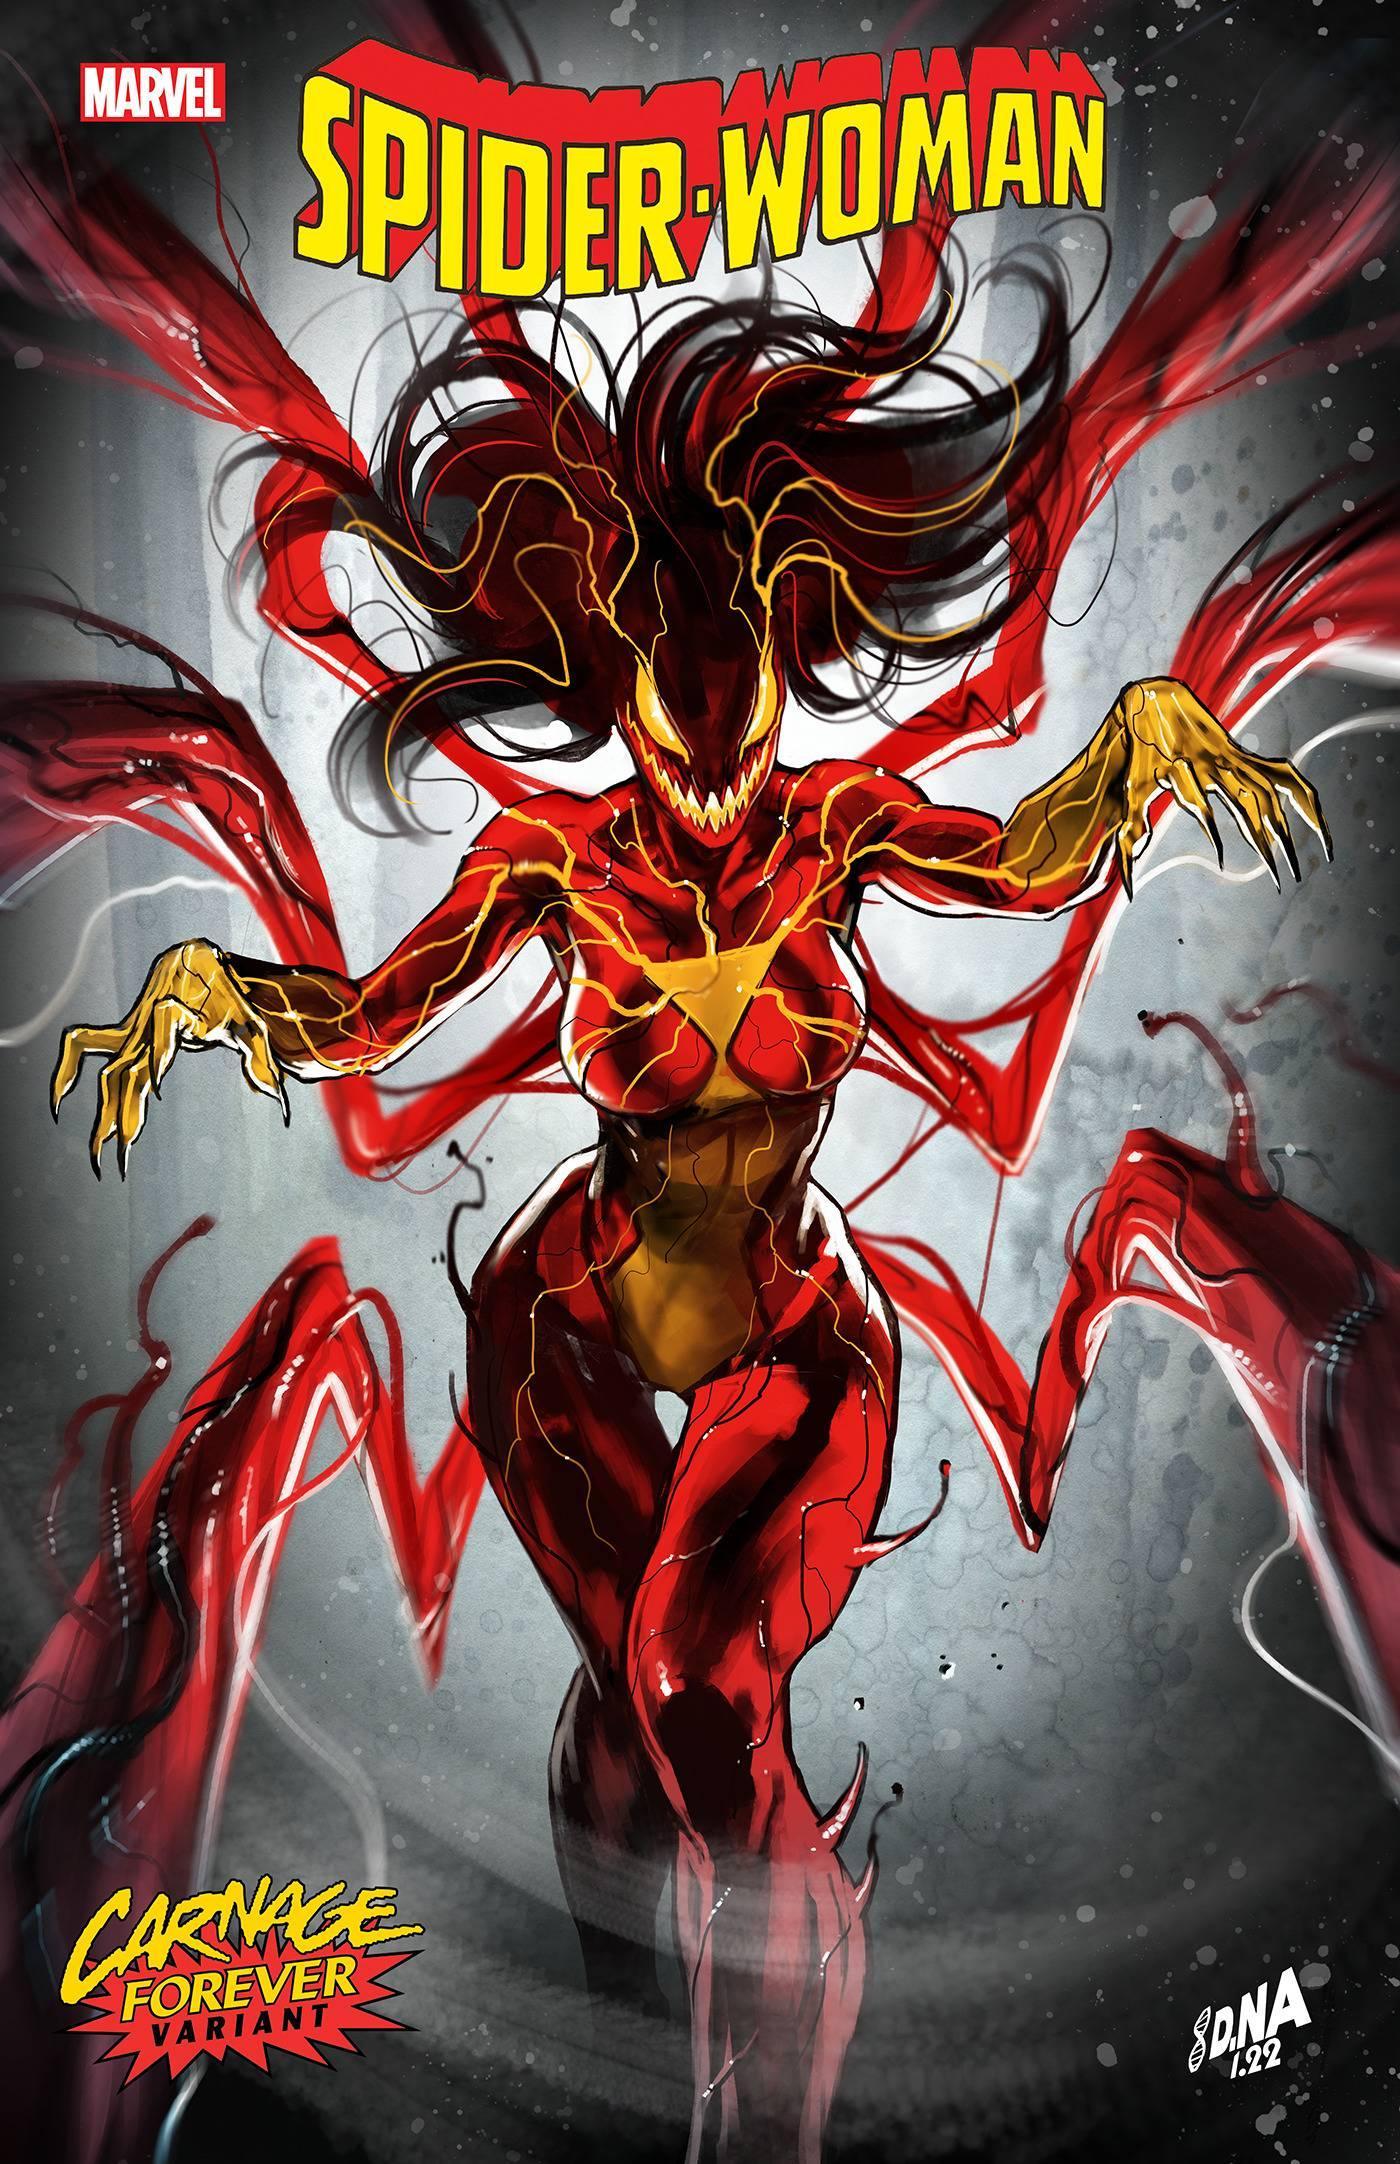 SPIDER-WOMAN VOL 7 #21 NAKAYAMA CARNAGE FOREVER VAR - Kings Comics